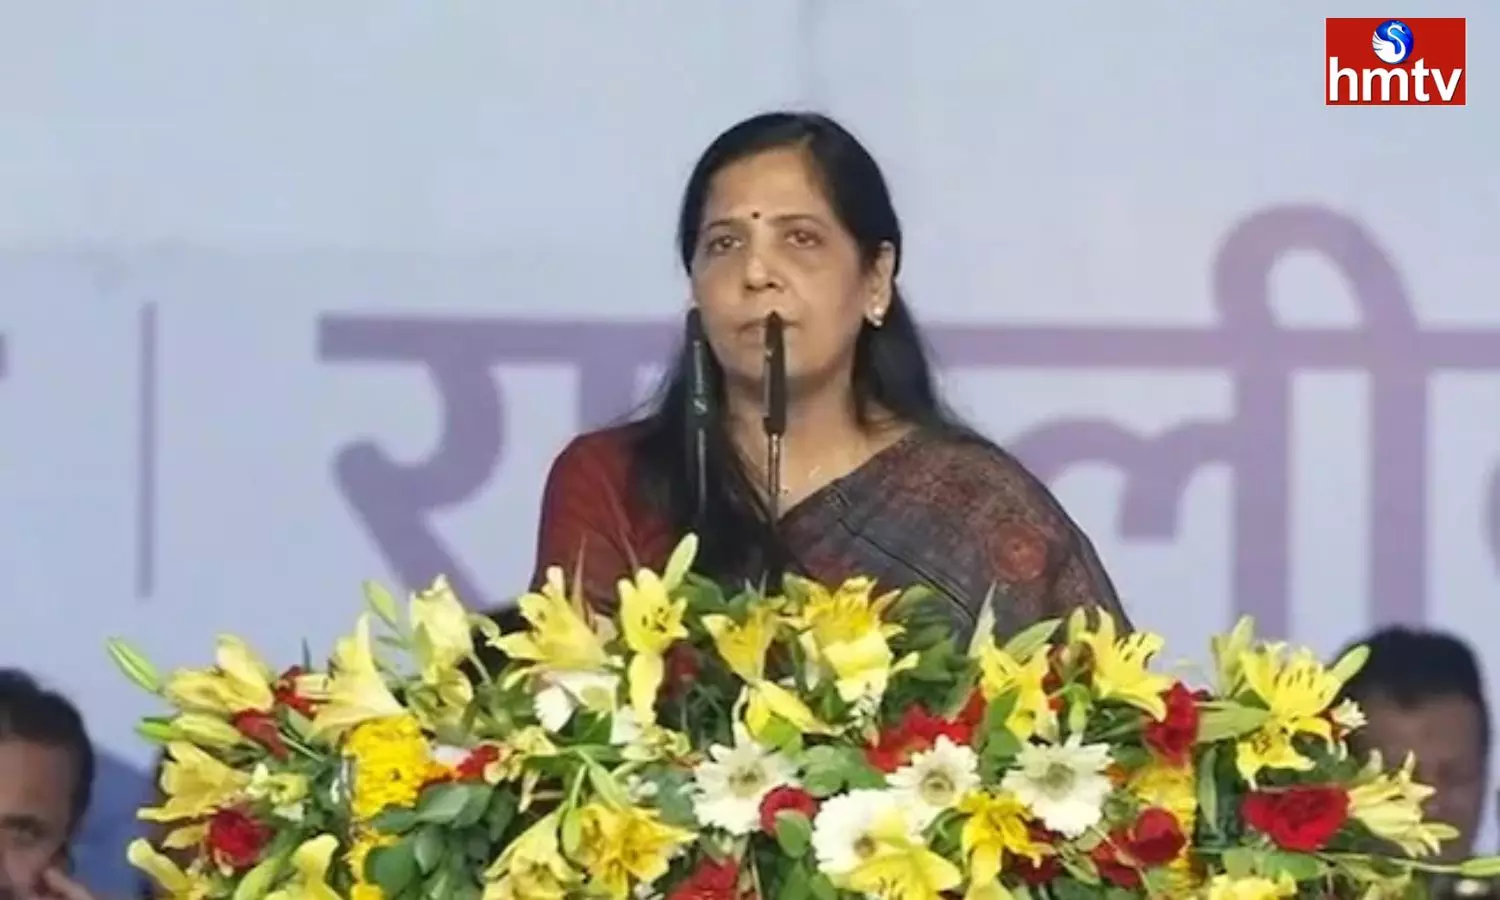 We Are Inviting Indians To Build A New India Says Sunita Kejriwal